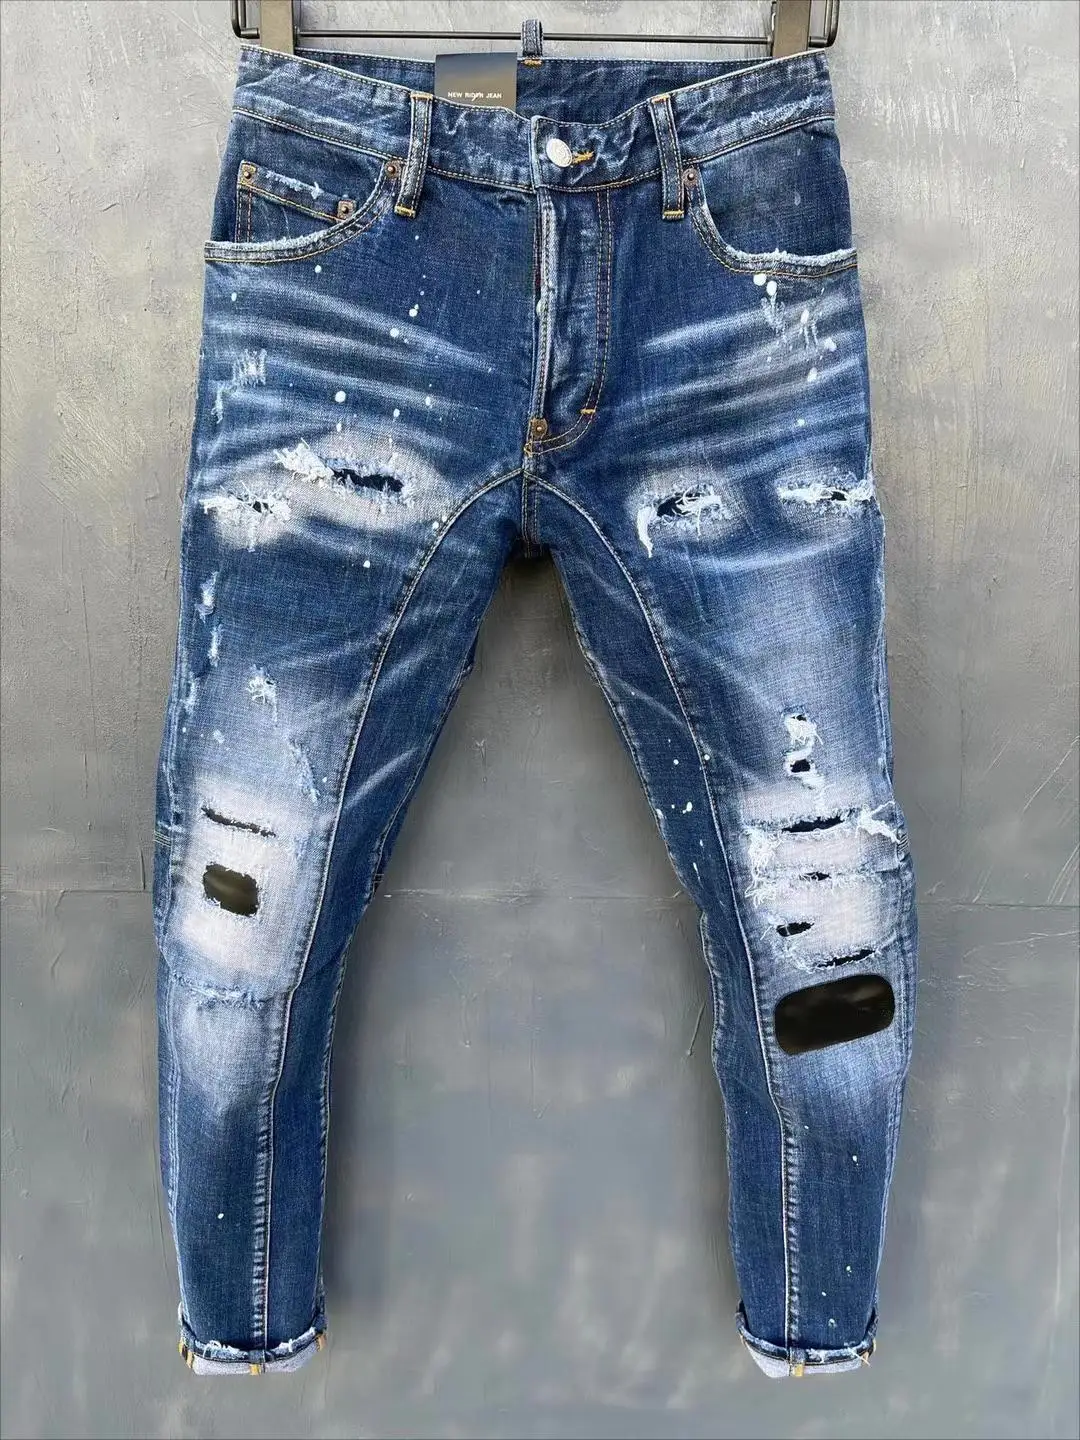 

New Men's Rivet Decoration Hole Black Patch Scratched Ripped Fashion Pencil Pants Jeans T151#